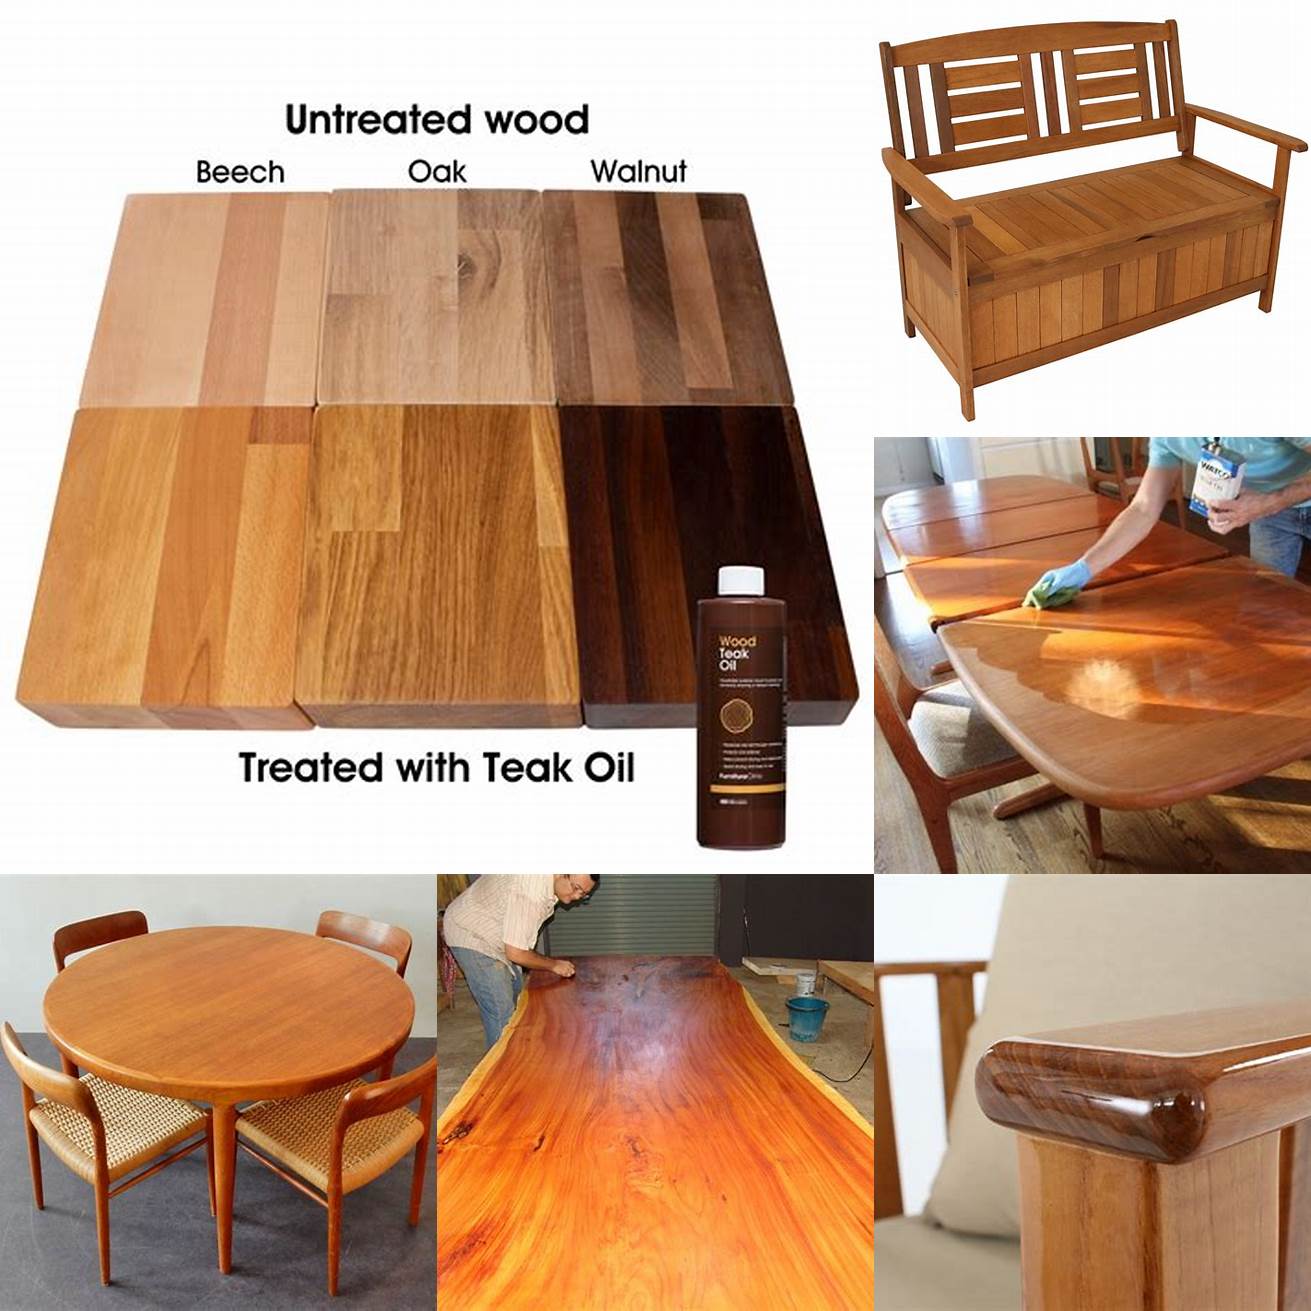 Teak furniture with a teak oil finish